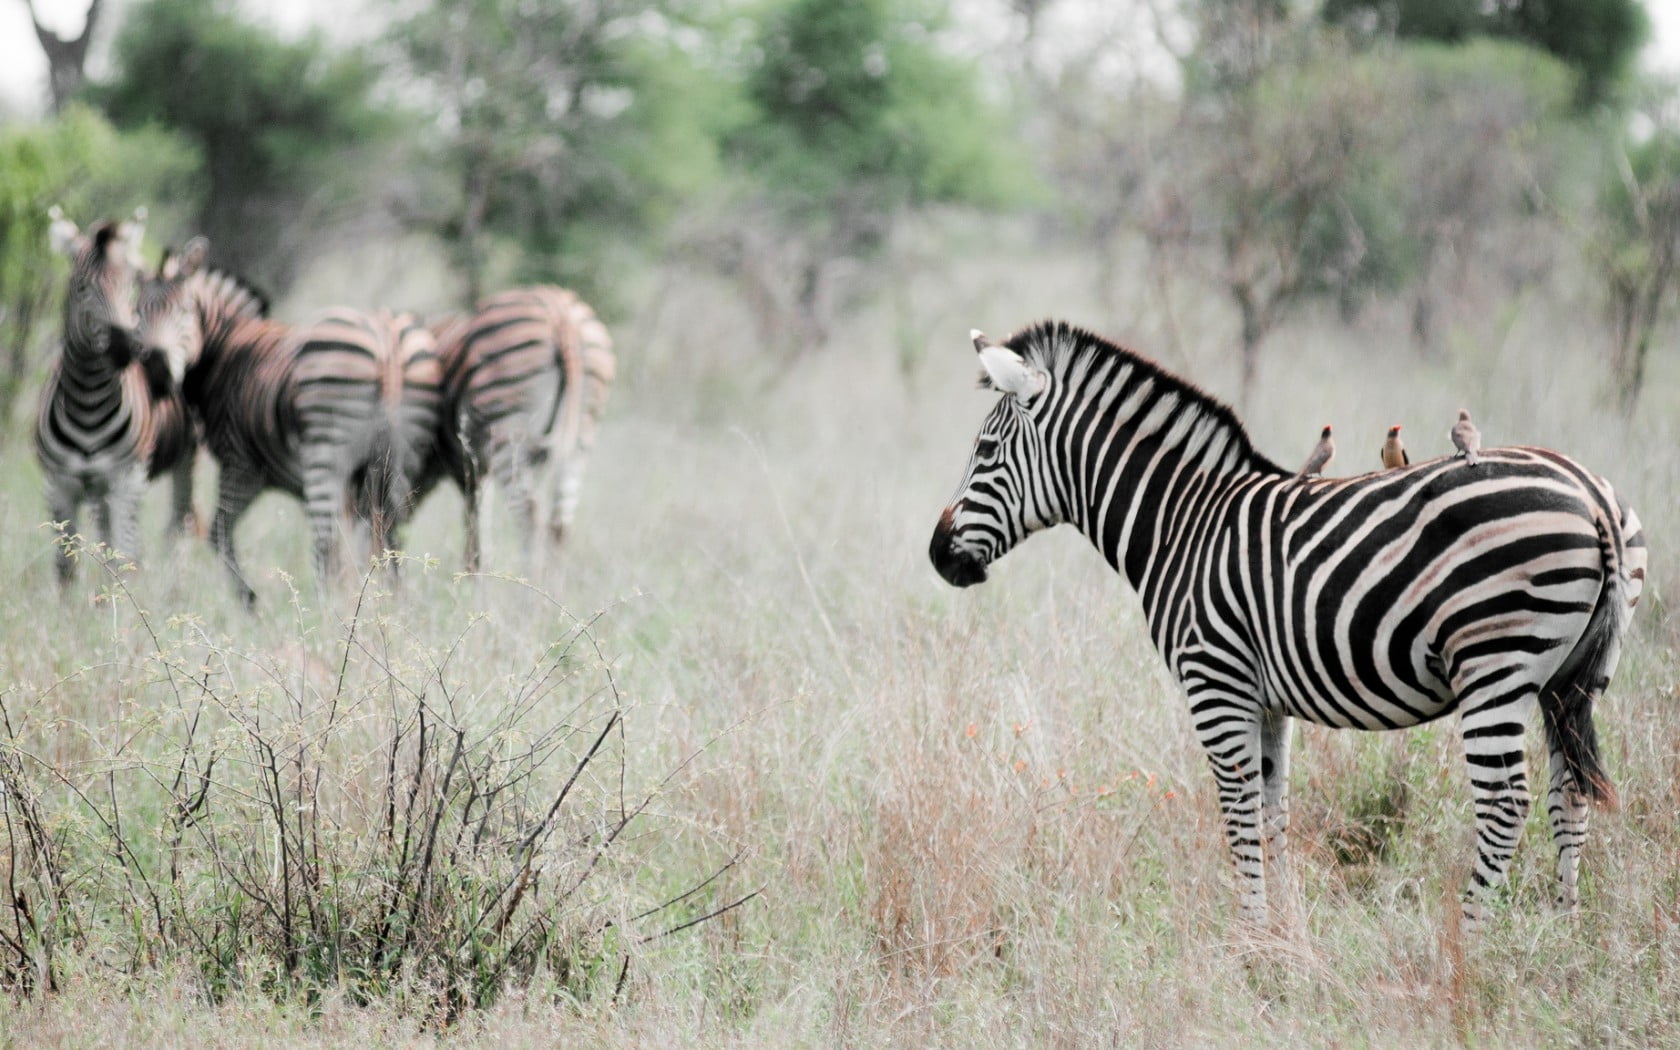 zebra at grass field